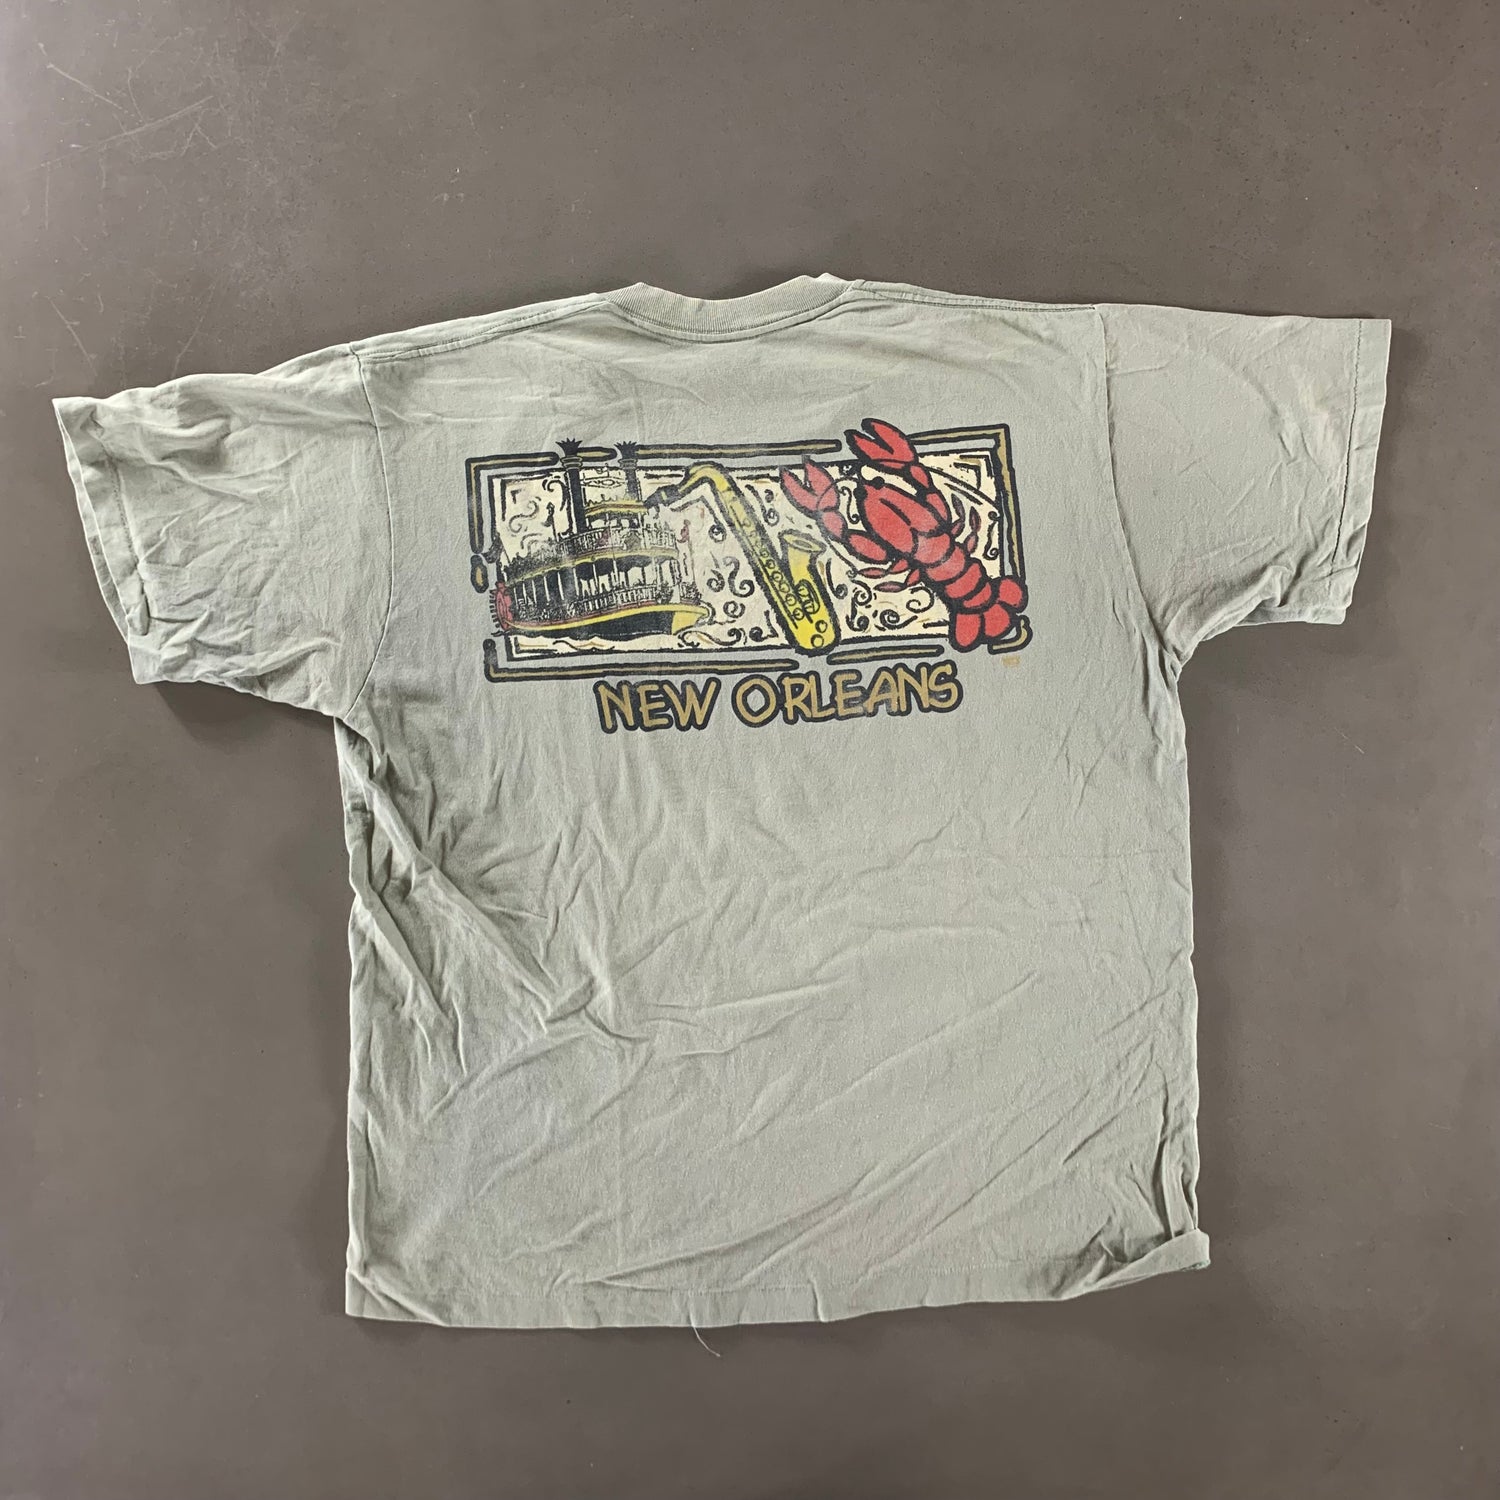 Vintage 1990s New Orleans T-shirt size Large